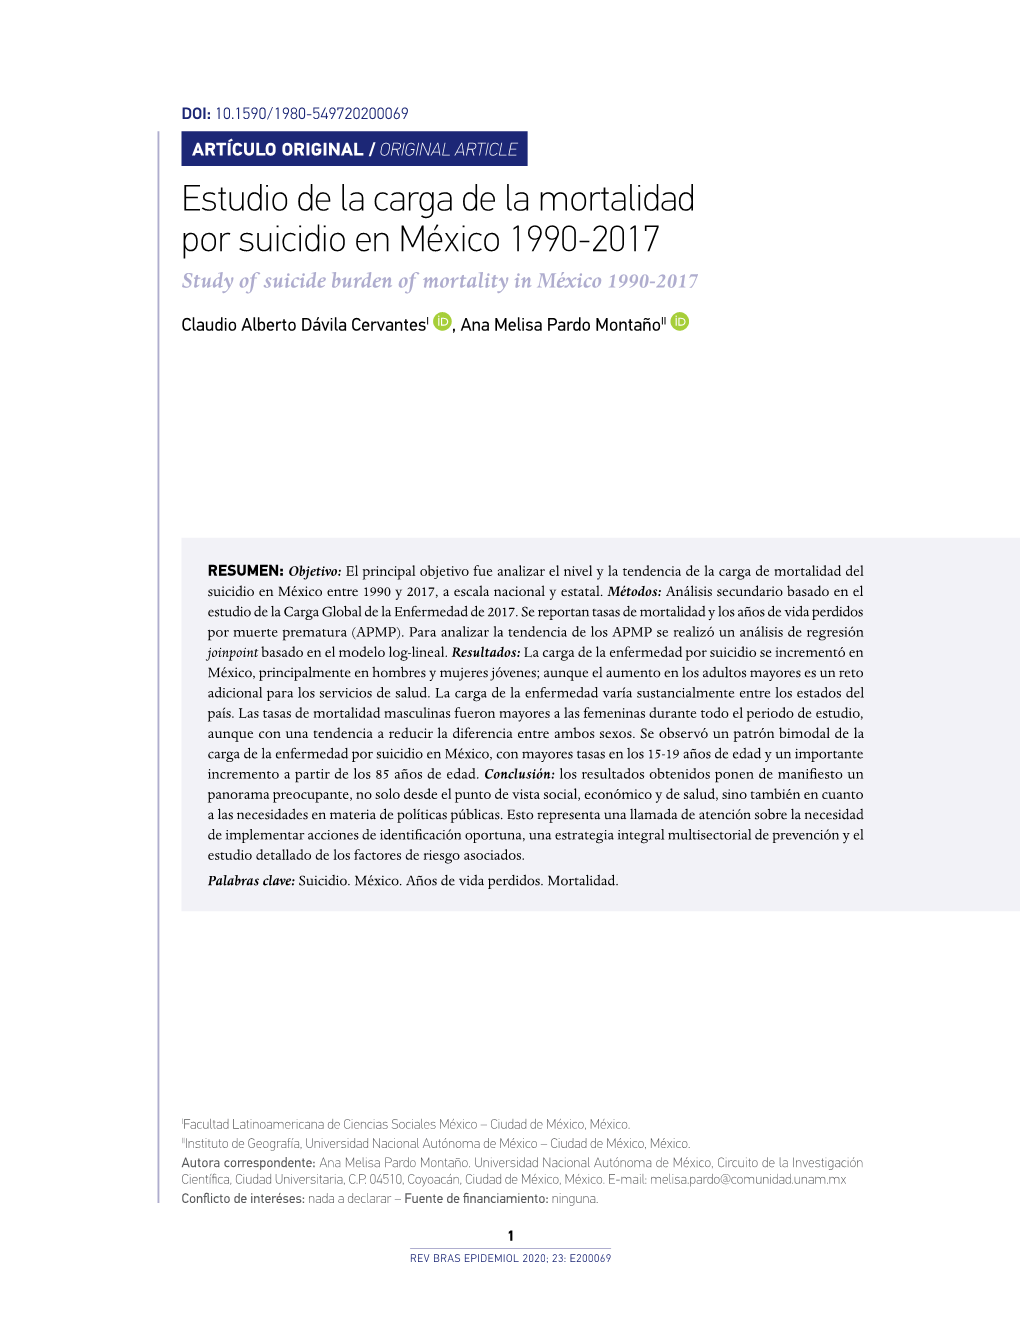 Study of Suicide Burden of Mortality in México 1990-2017